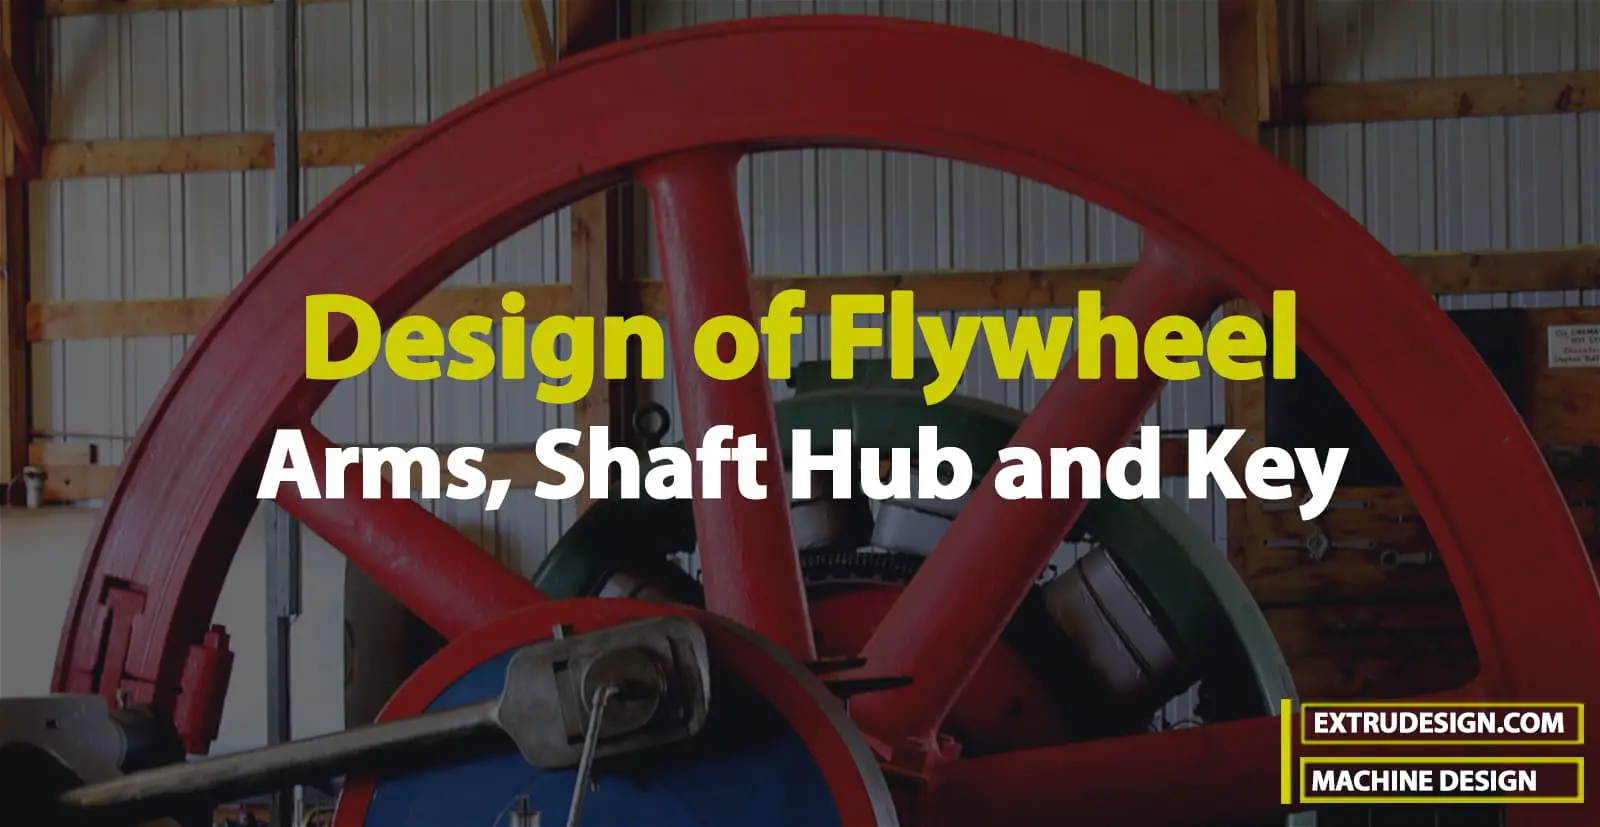 Design of Flywheel Arms, Shaft, Hub and Key